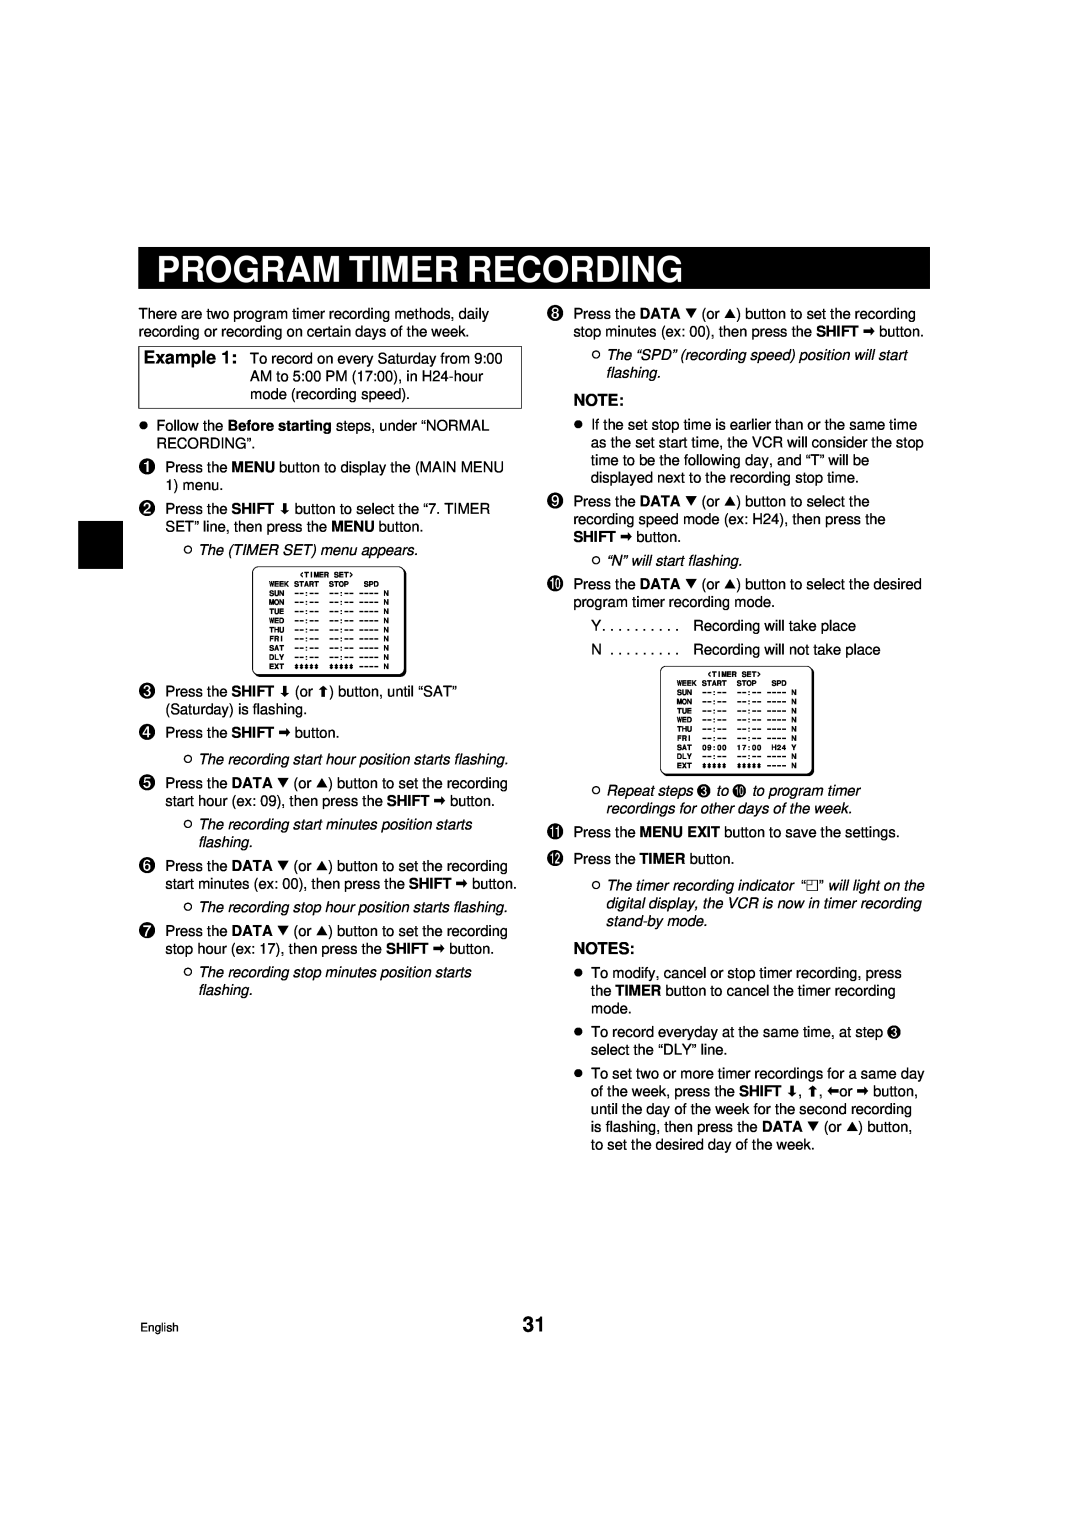 Sanyo DTL-4800 Program Timer Recording, ø The TIMER SET menu appears, ø The recording start hour position starts flashing 